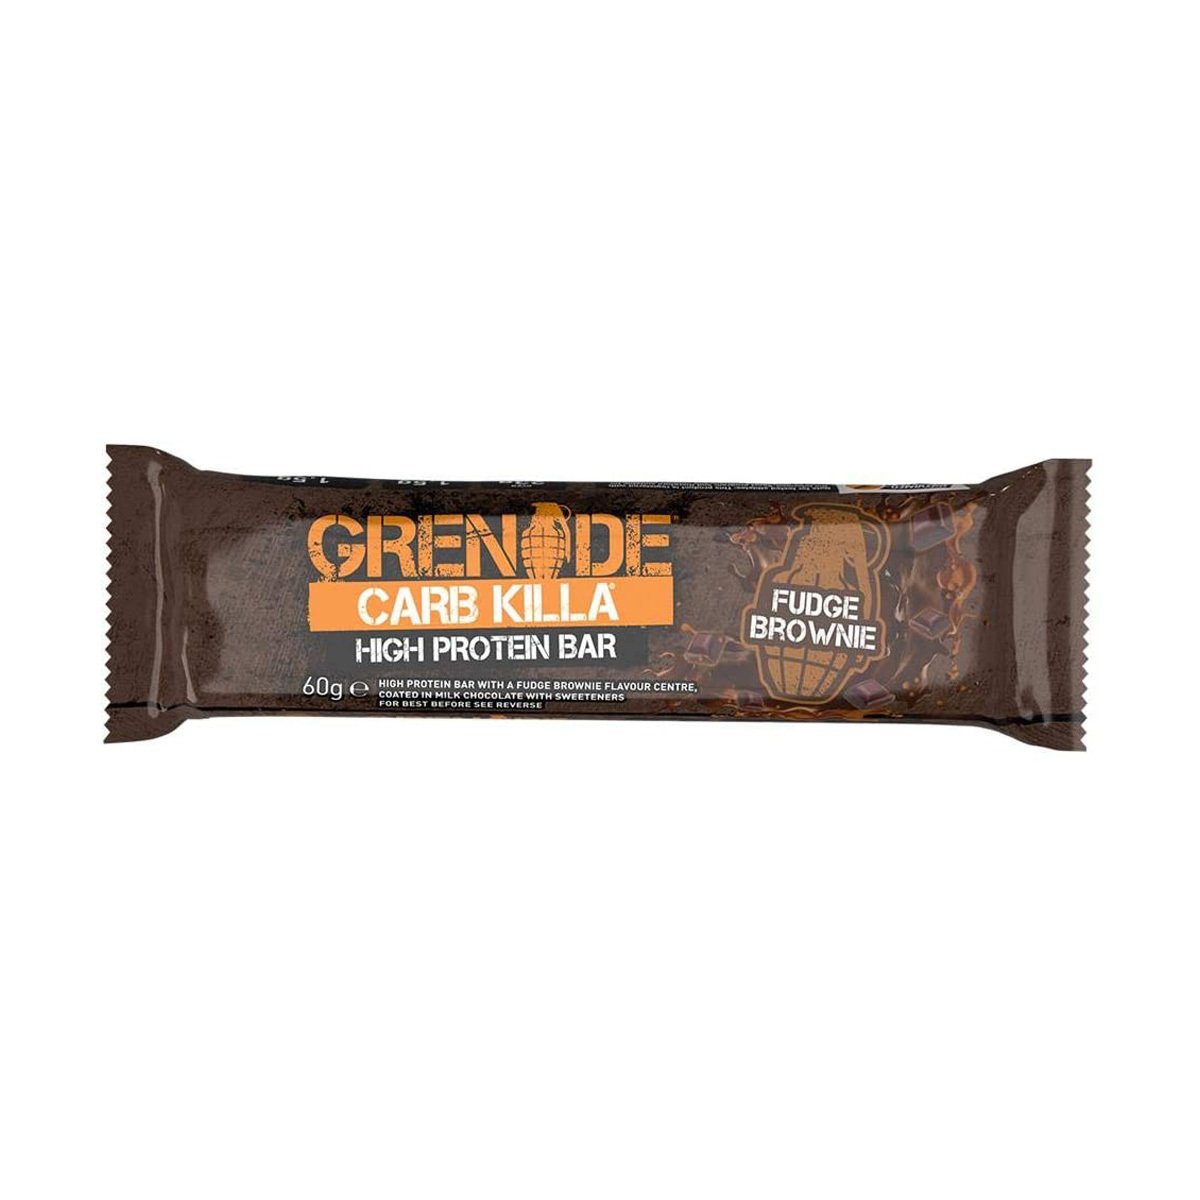 Grenade Carb Killa Bar Fudge Brownie 60g